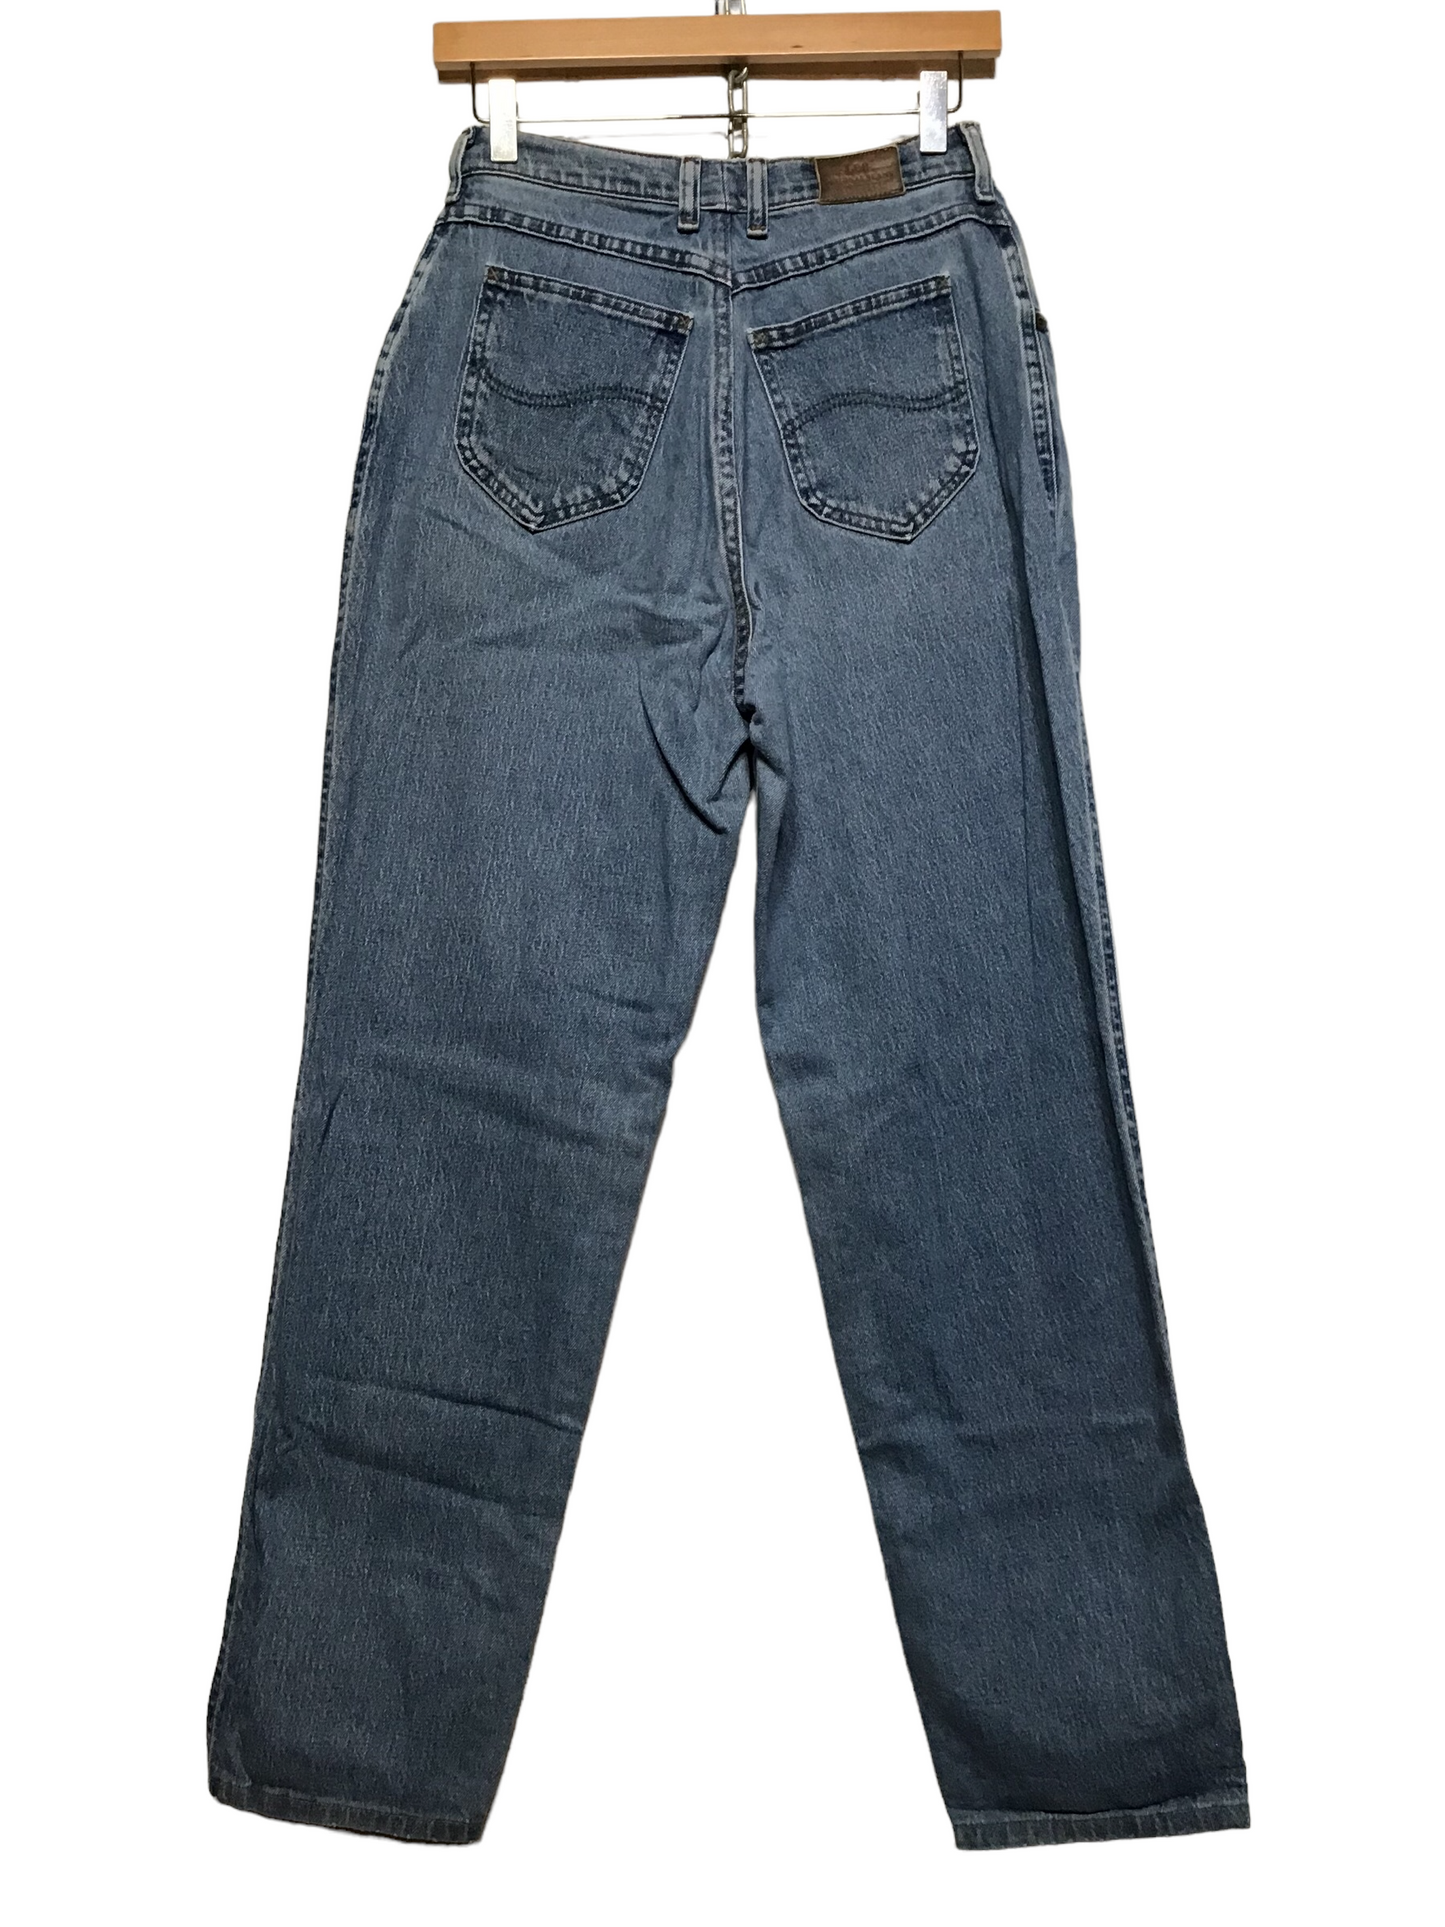 Lee Original Jeans (26X30)